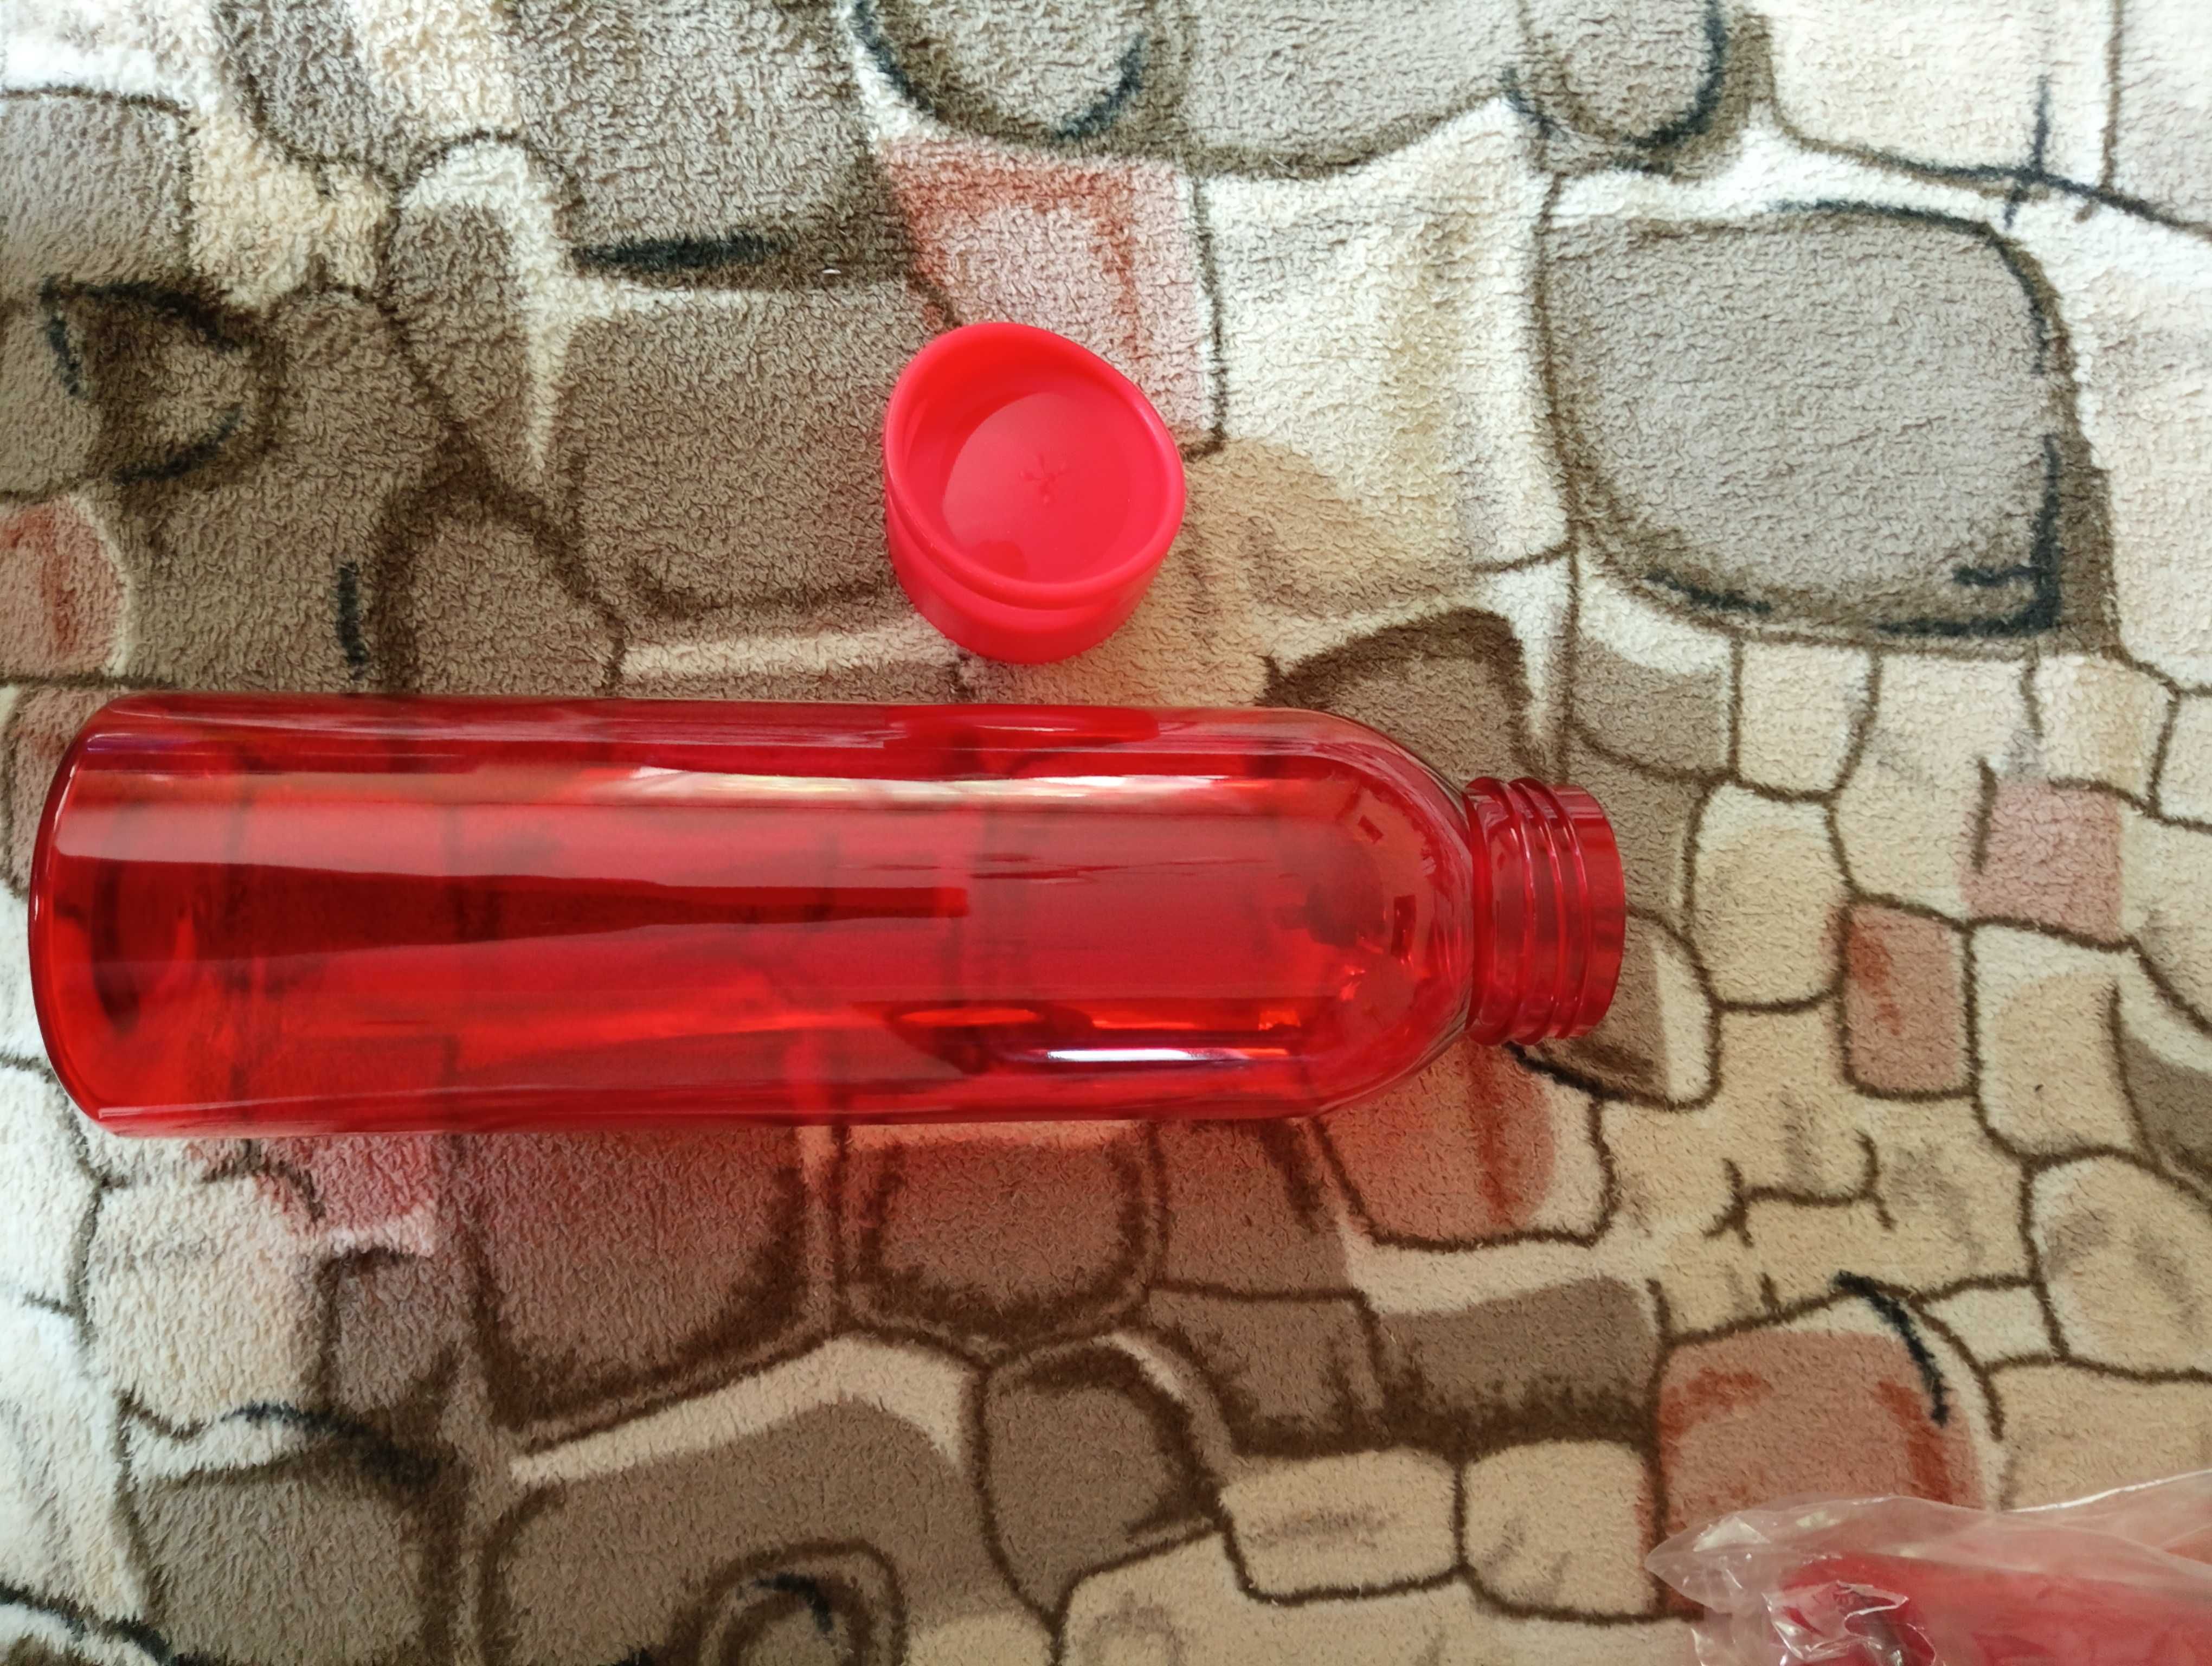 Бутылочка для воды